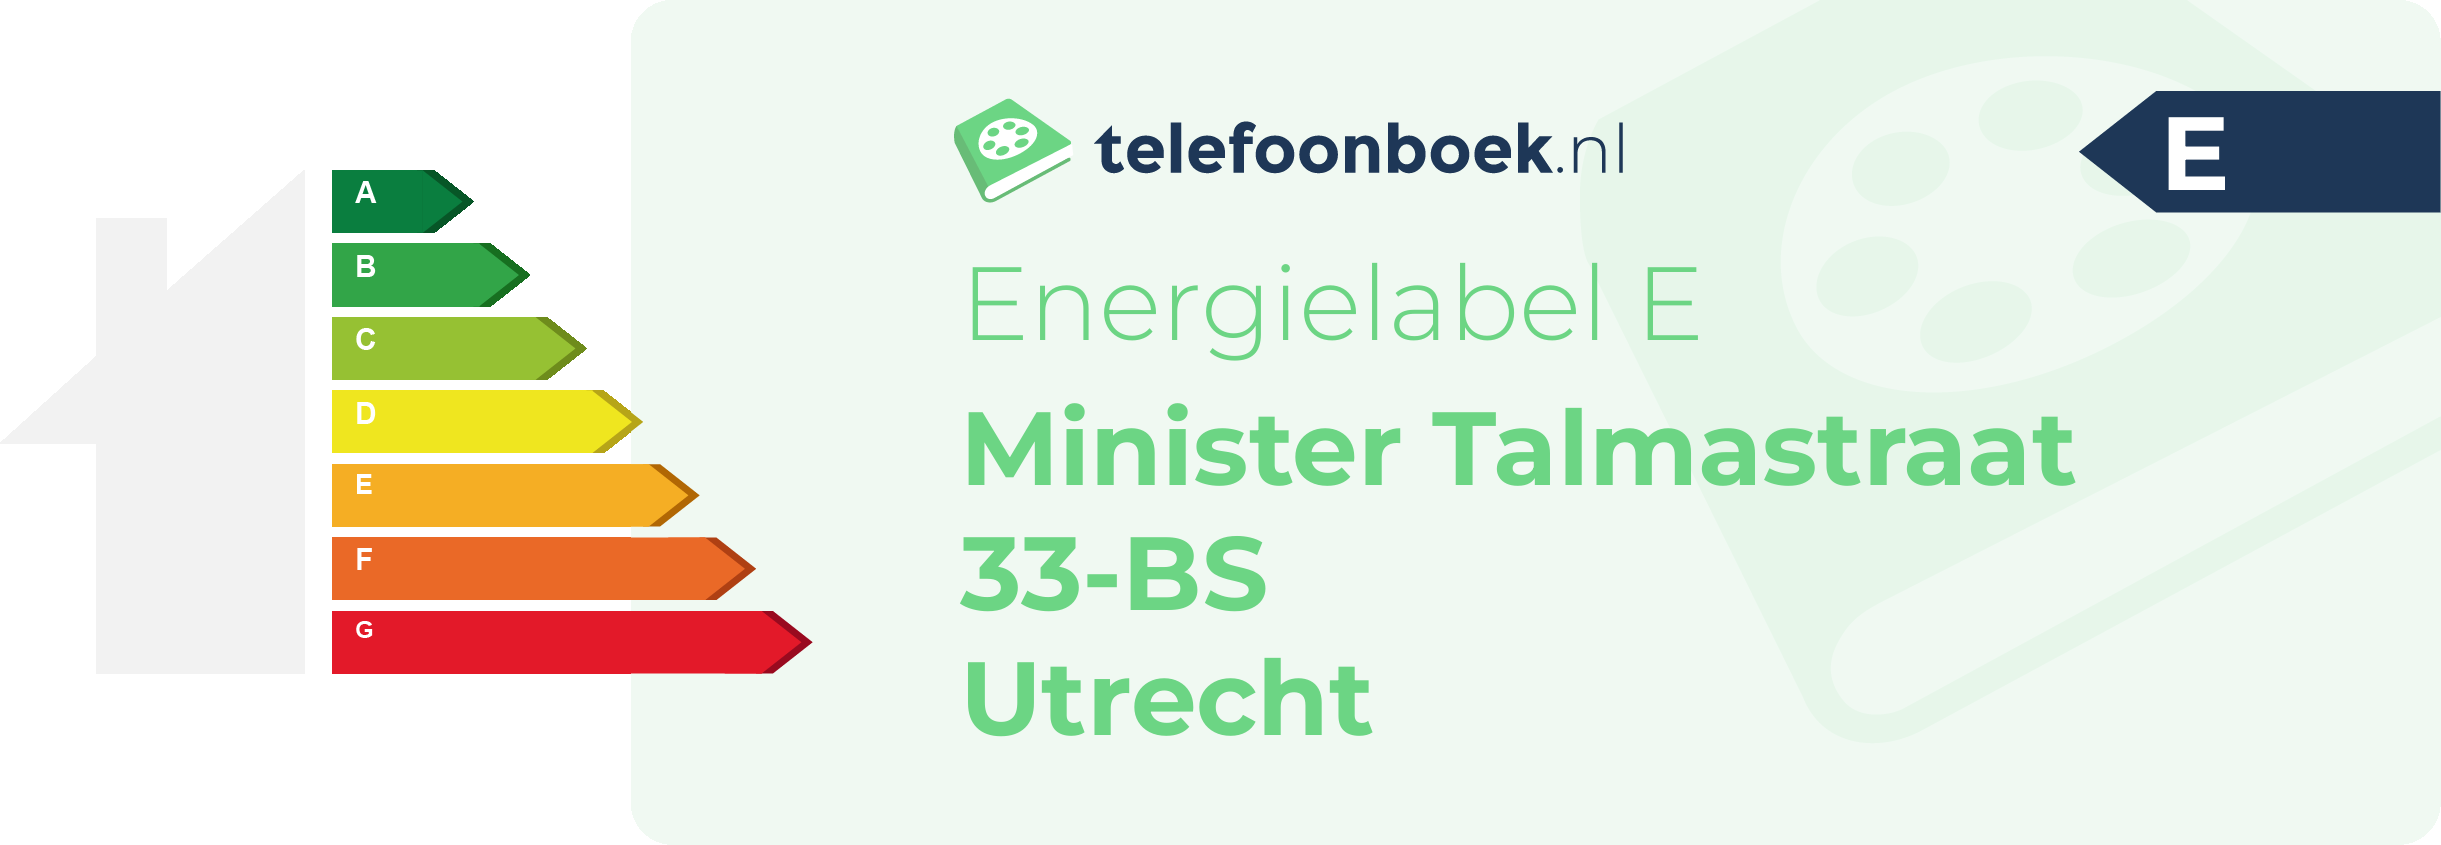 Energielabel Minister Talmastraat 33-BS Utrecht